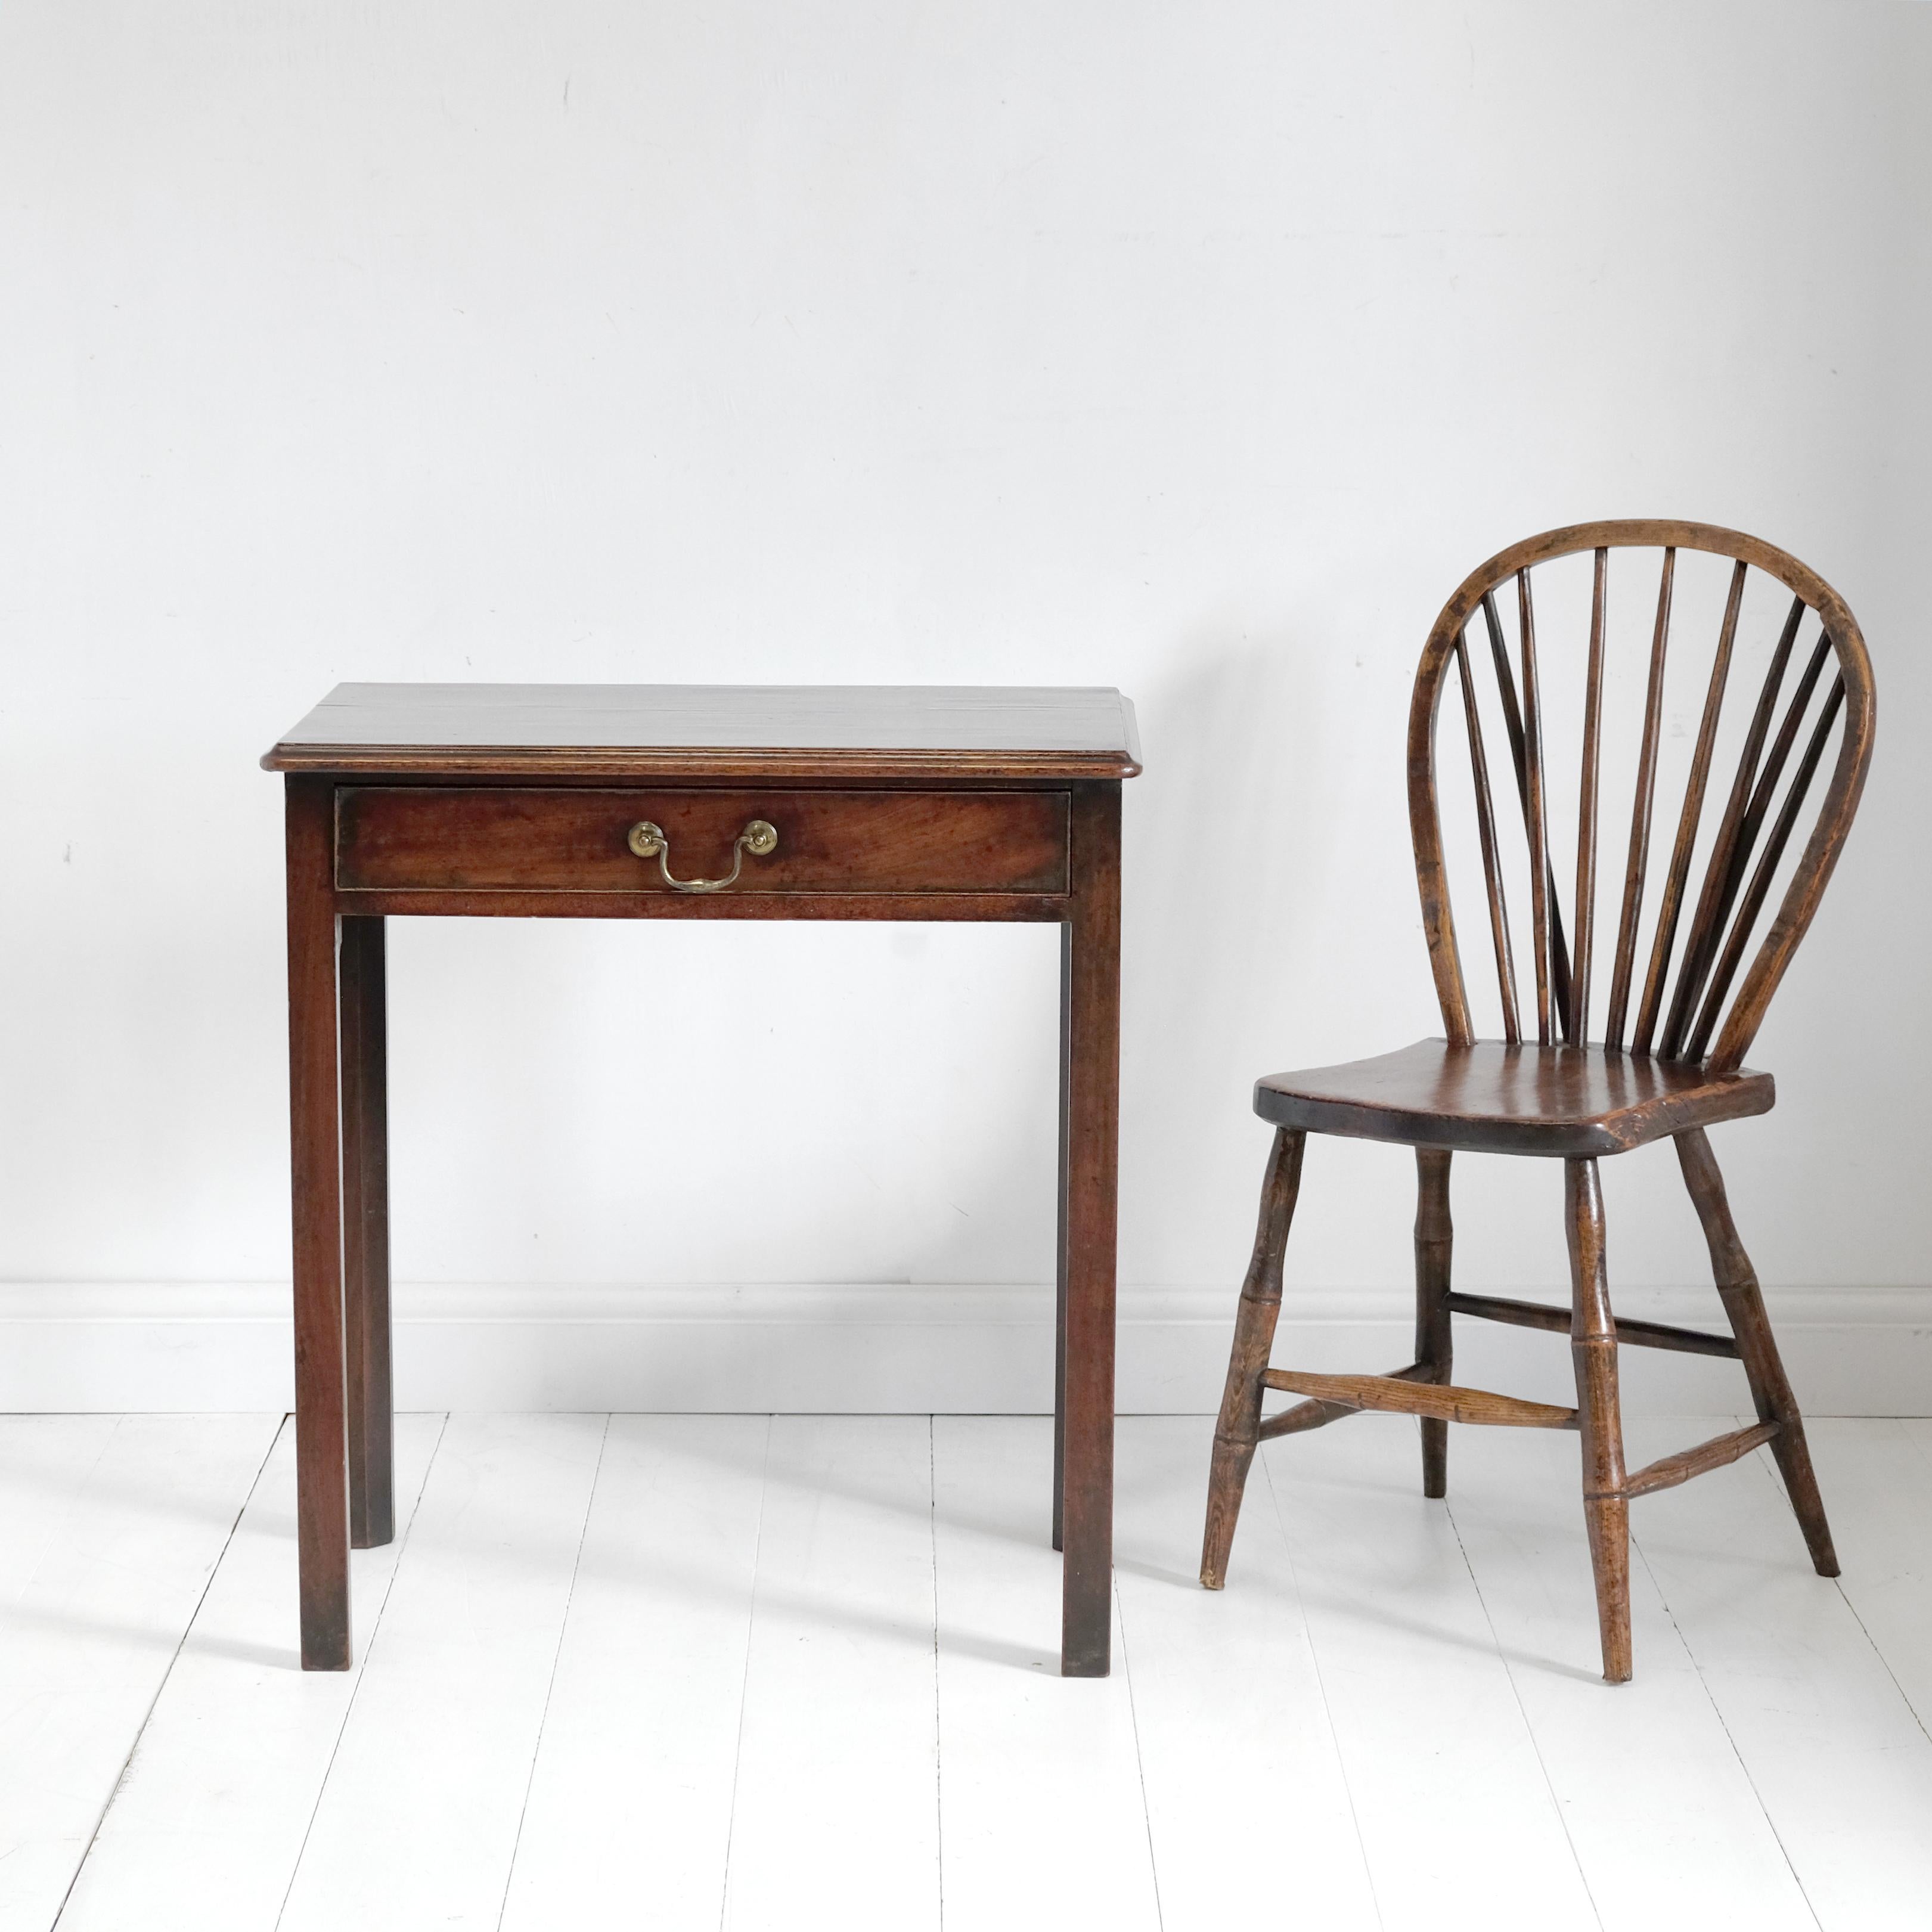 Georgian Mahogany Side Table, English, Simple Design, Small, Early 19th Century 4